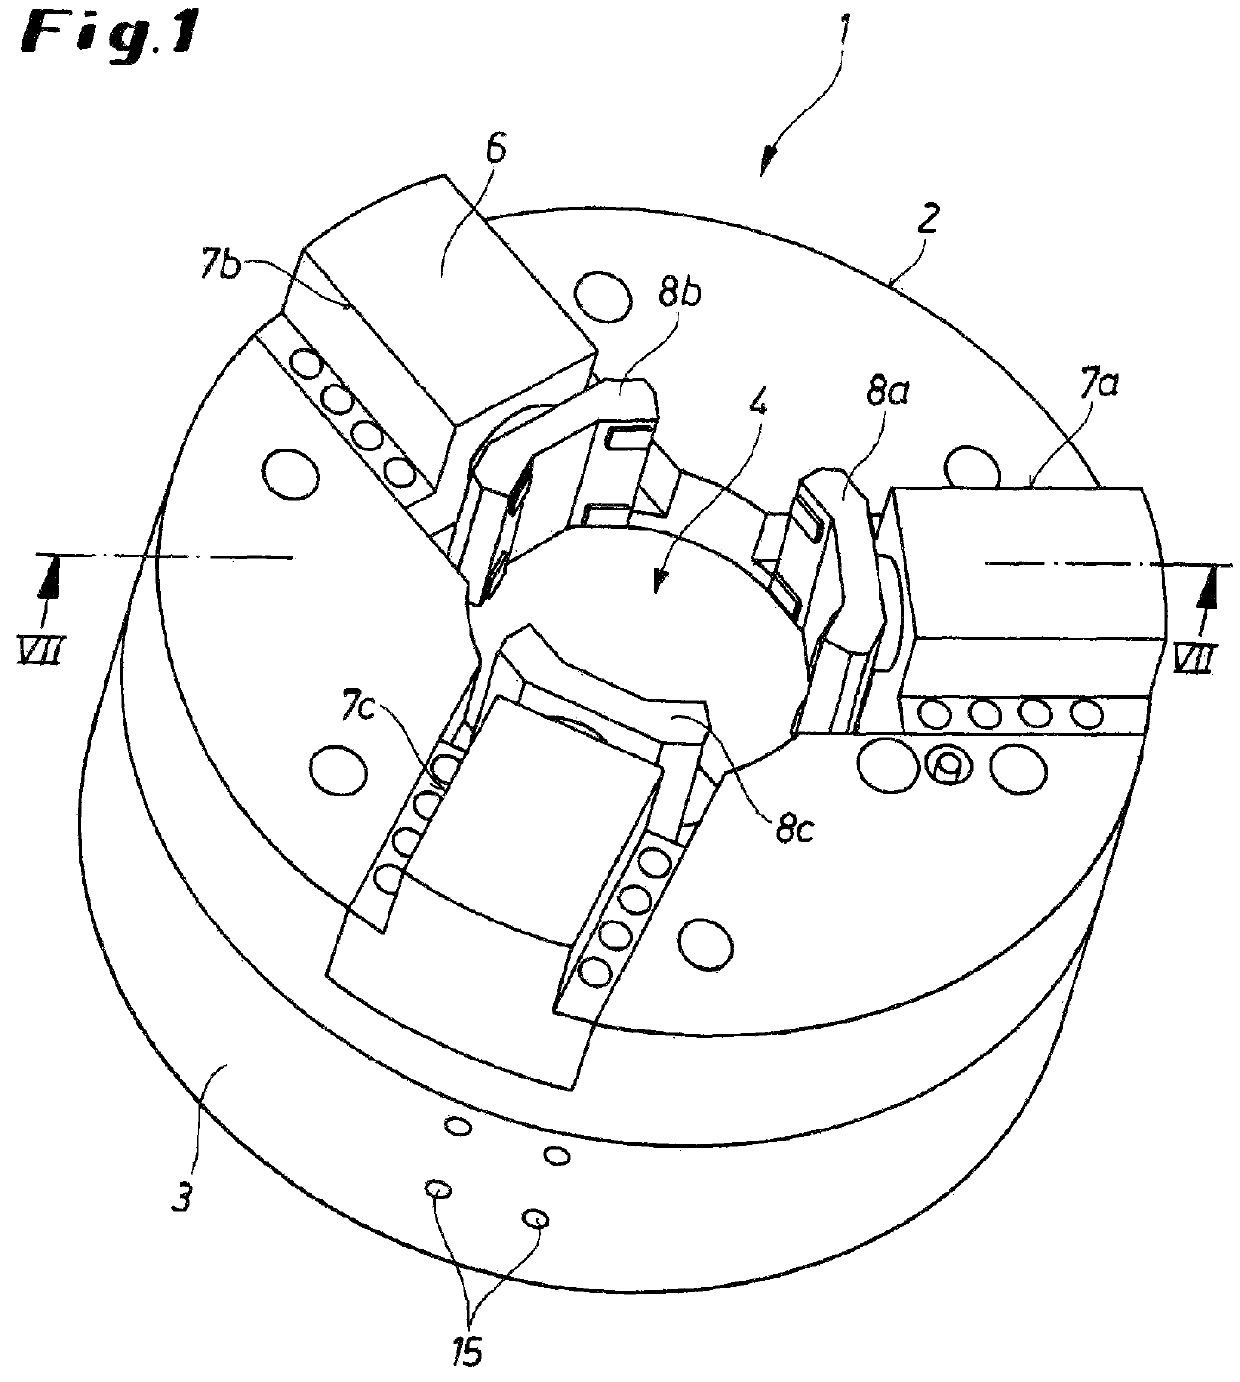 Chuck for apparatus for machining a tubular rotating workpiece